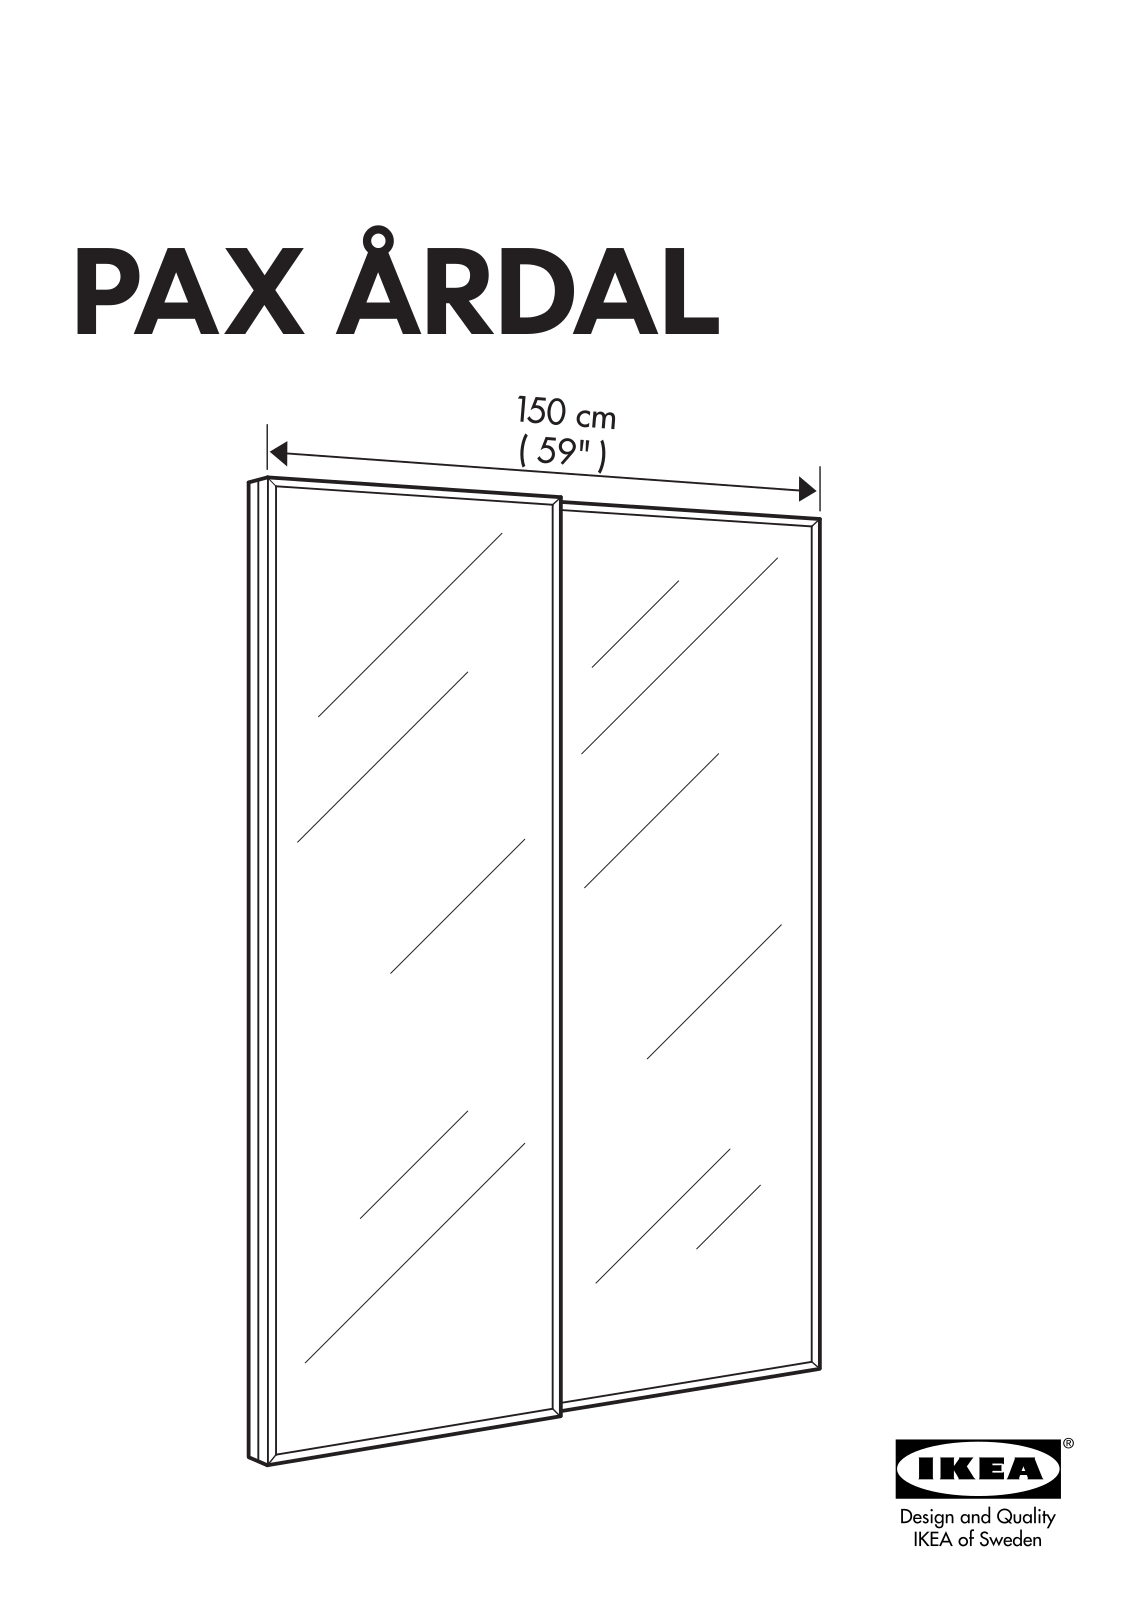 IKEA PAX ARDAL SLIDING DOOR 59X93 Assembly Instruction